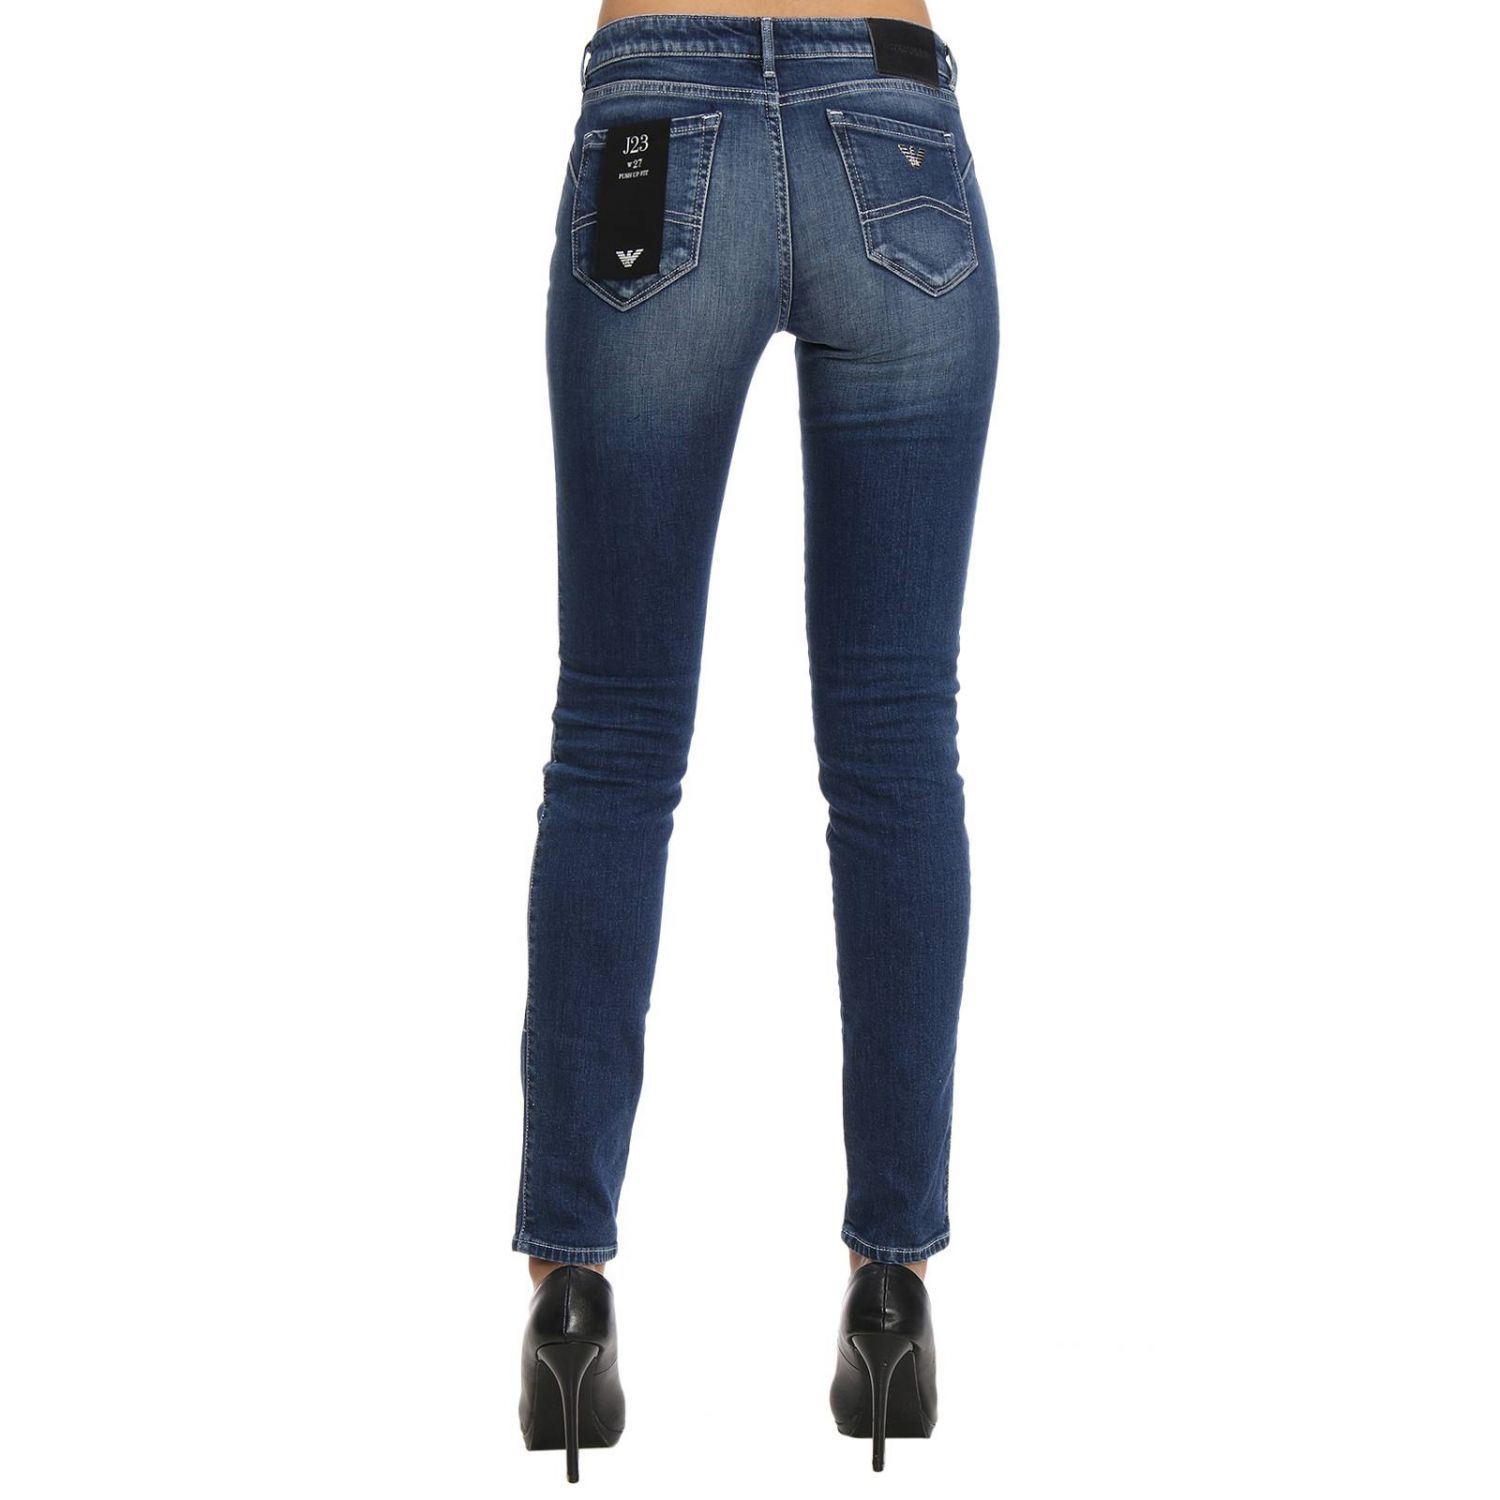 Emporio Armani Outlet: Jeans women | Jeans Emporio Armani Women Denim ...